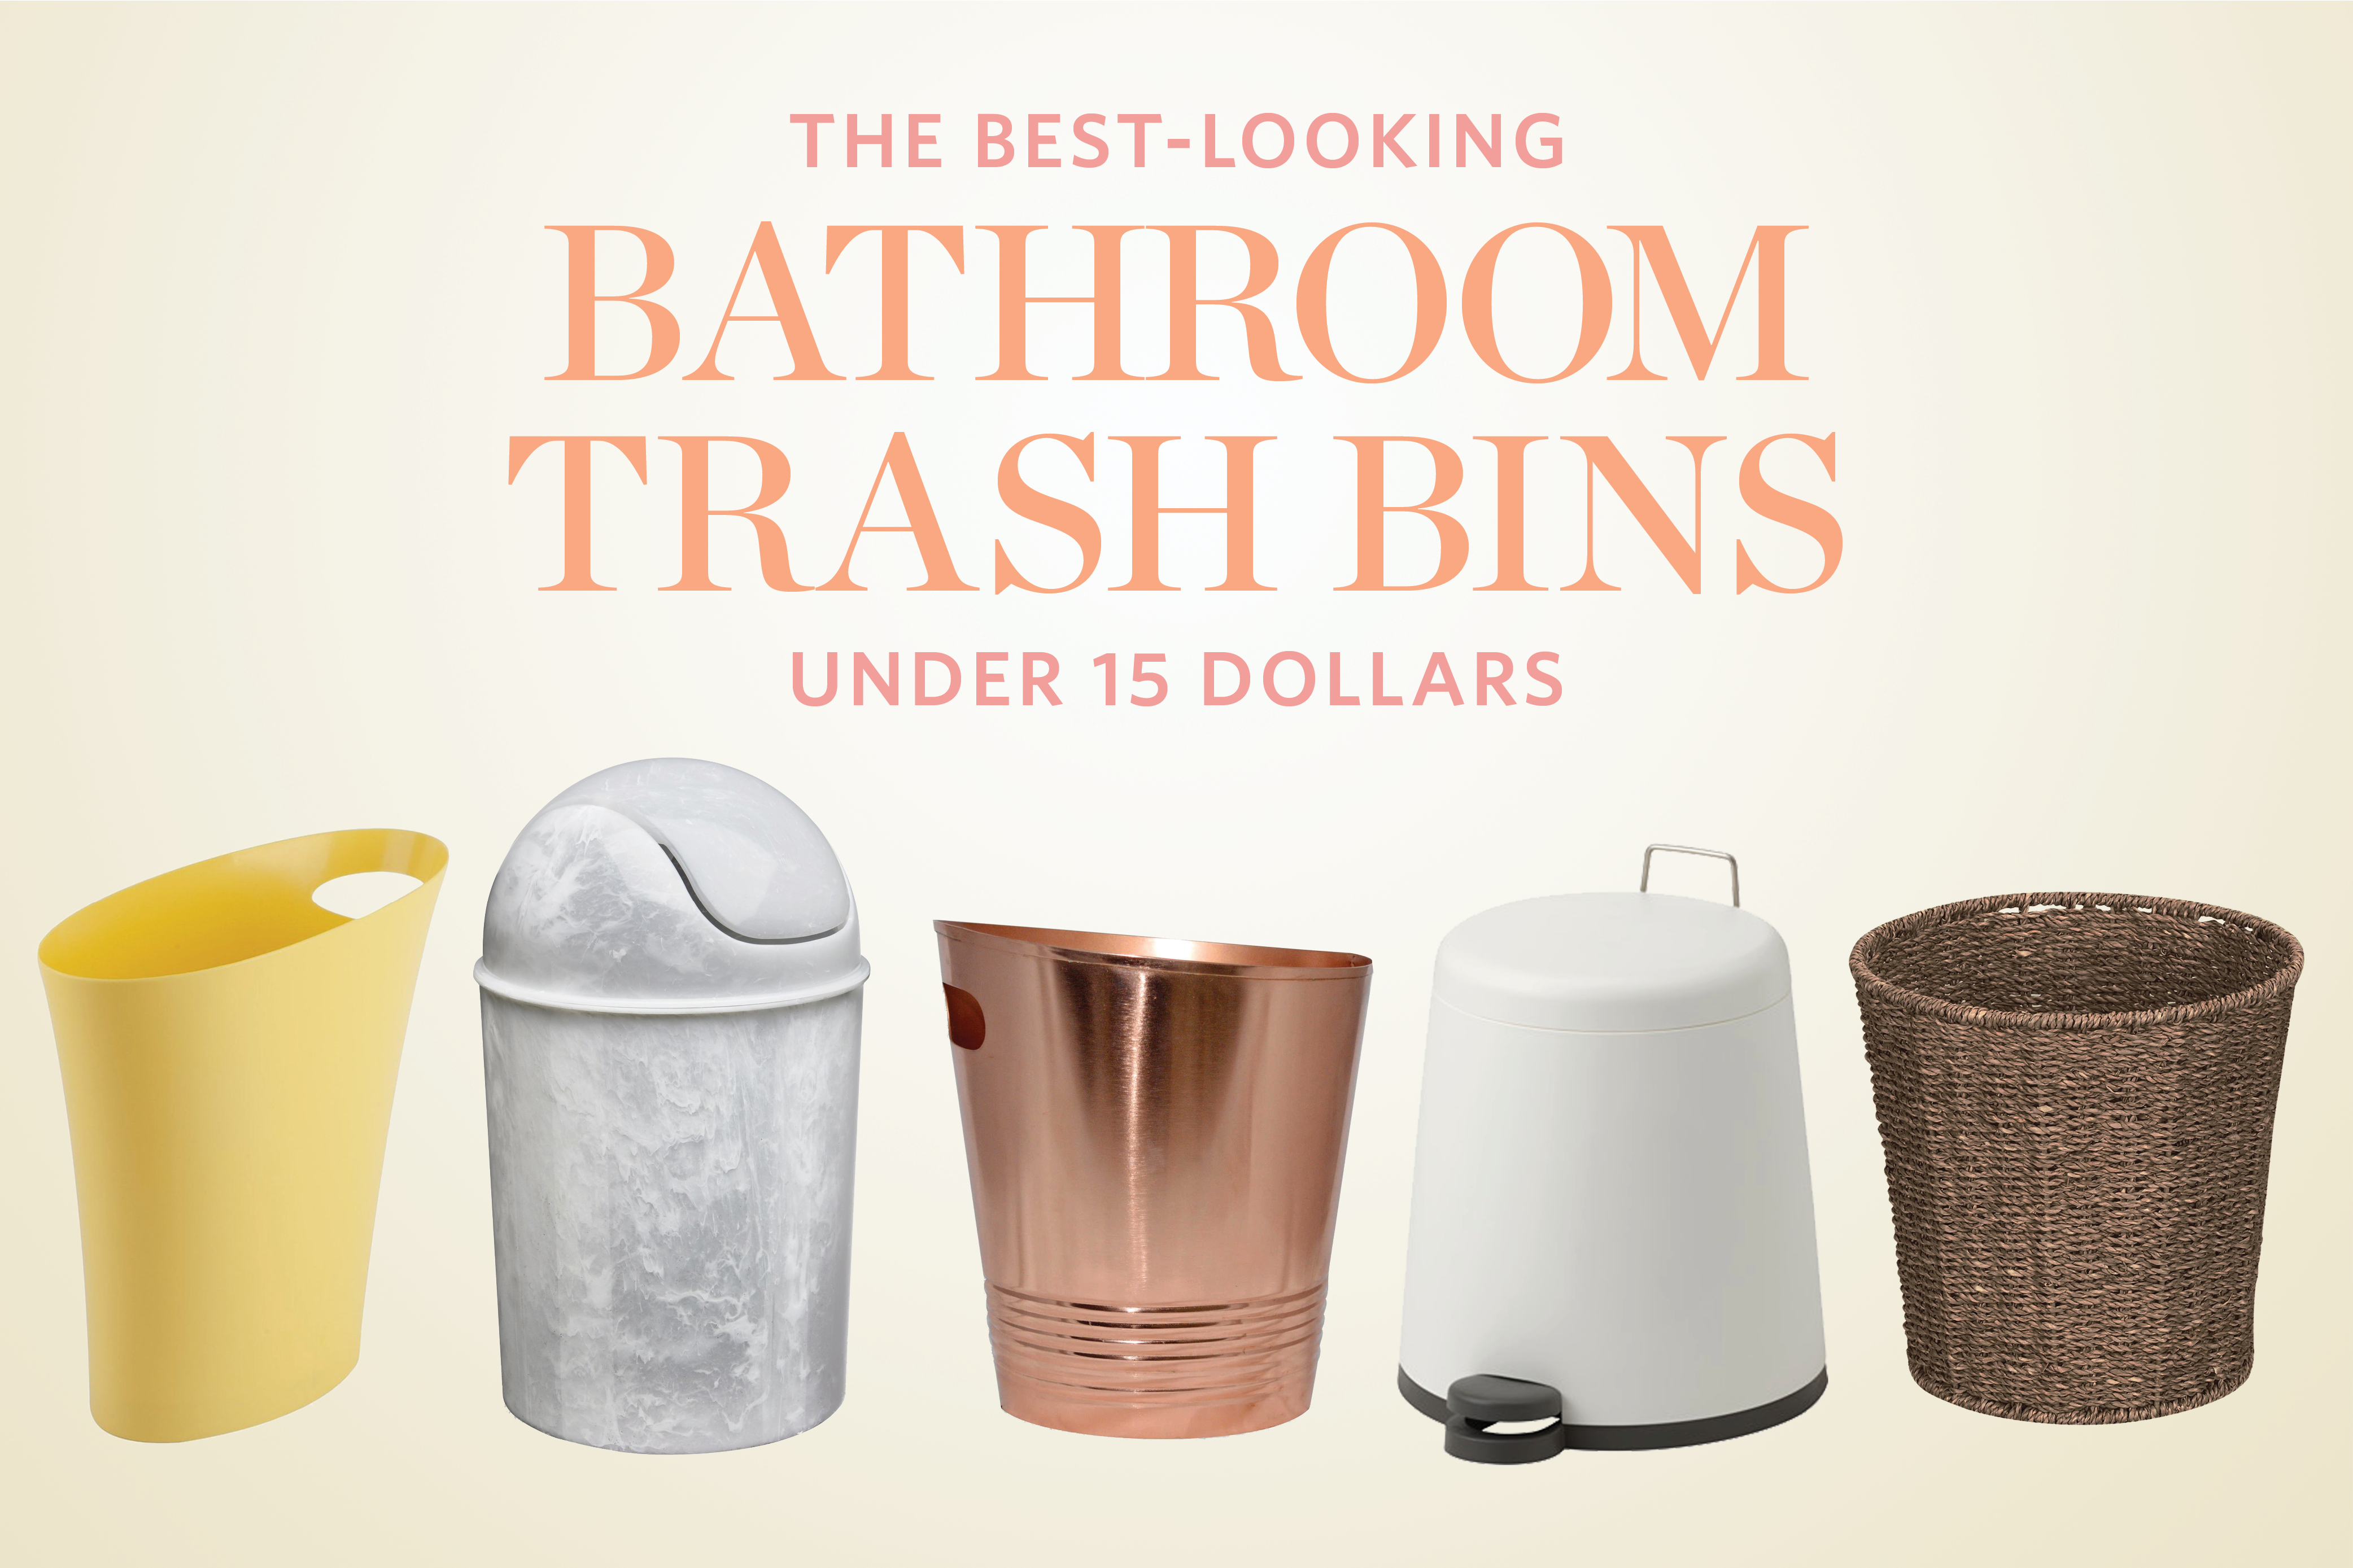 Kitchen Trash Cans - Bed Bath & Beyond